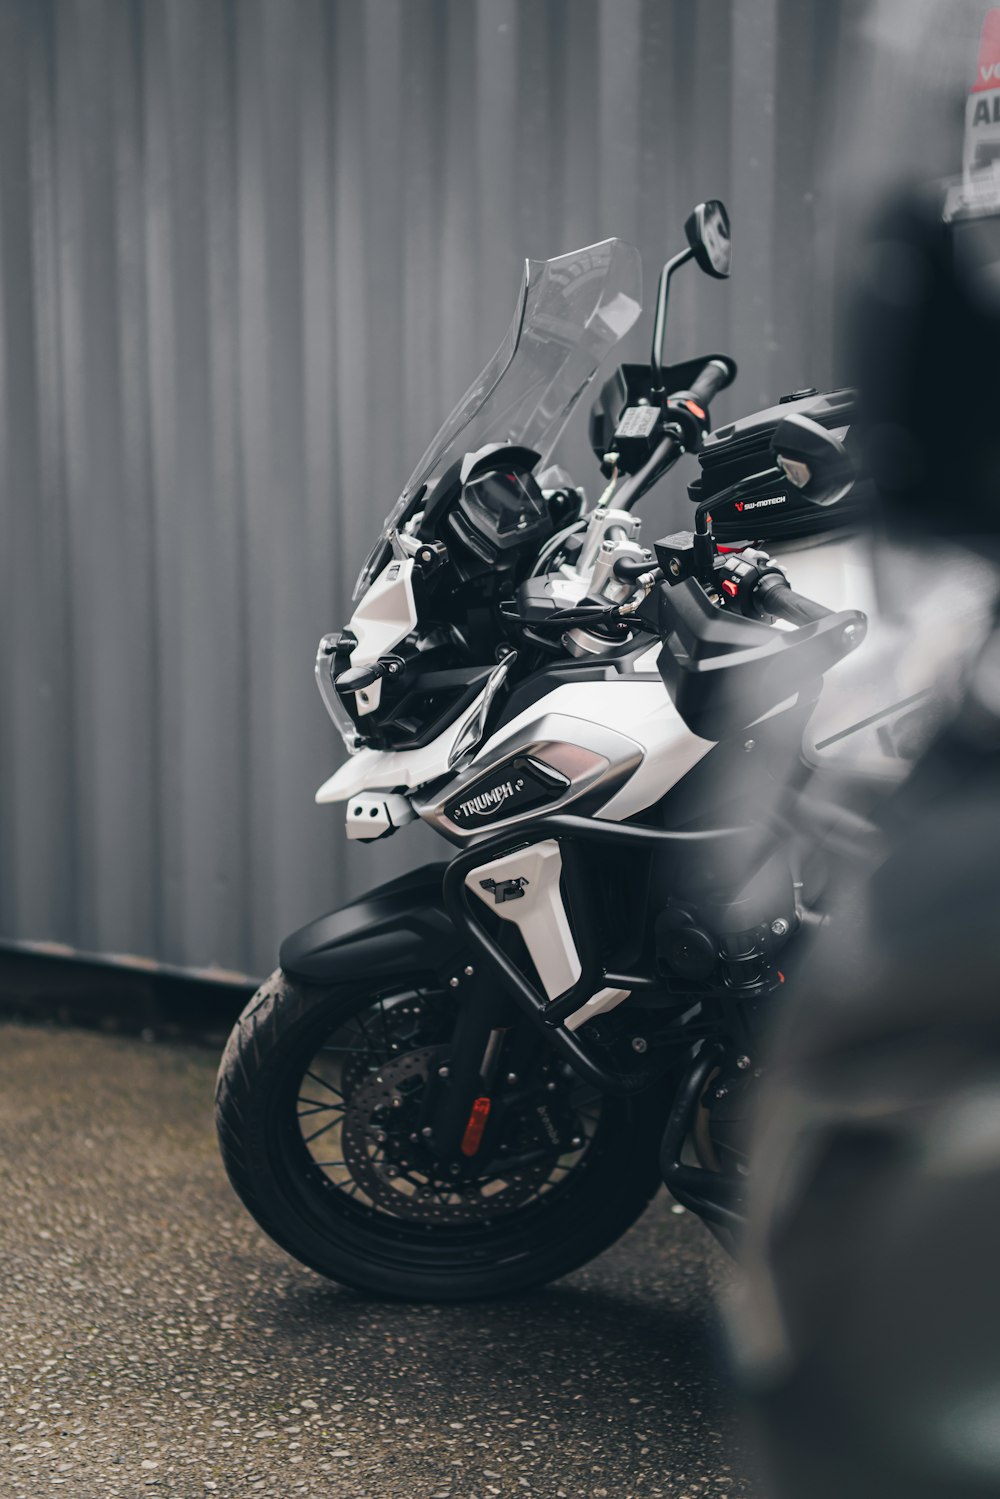 una moto parcheggiata in un garage